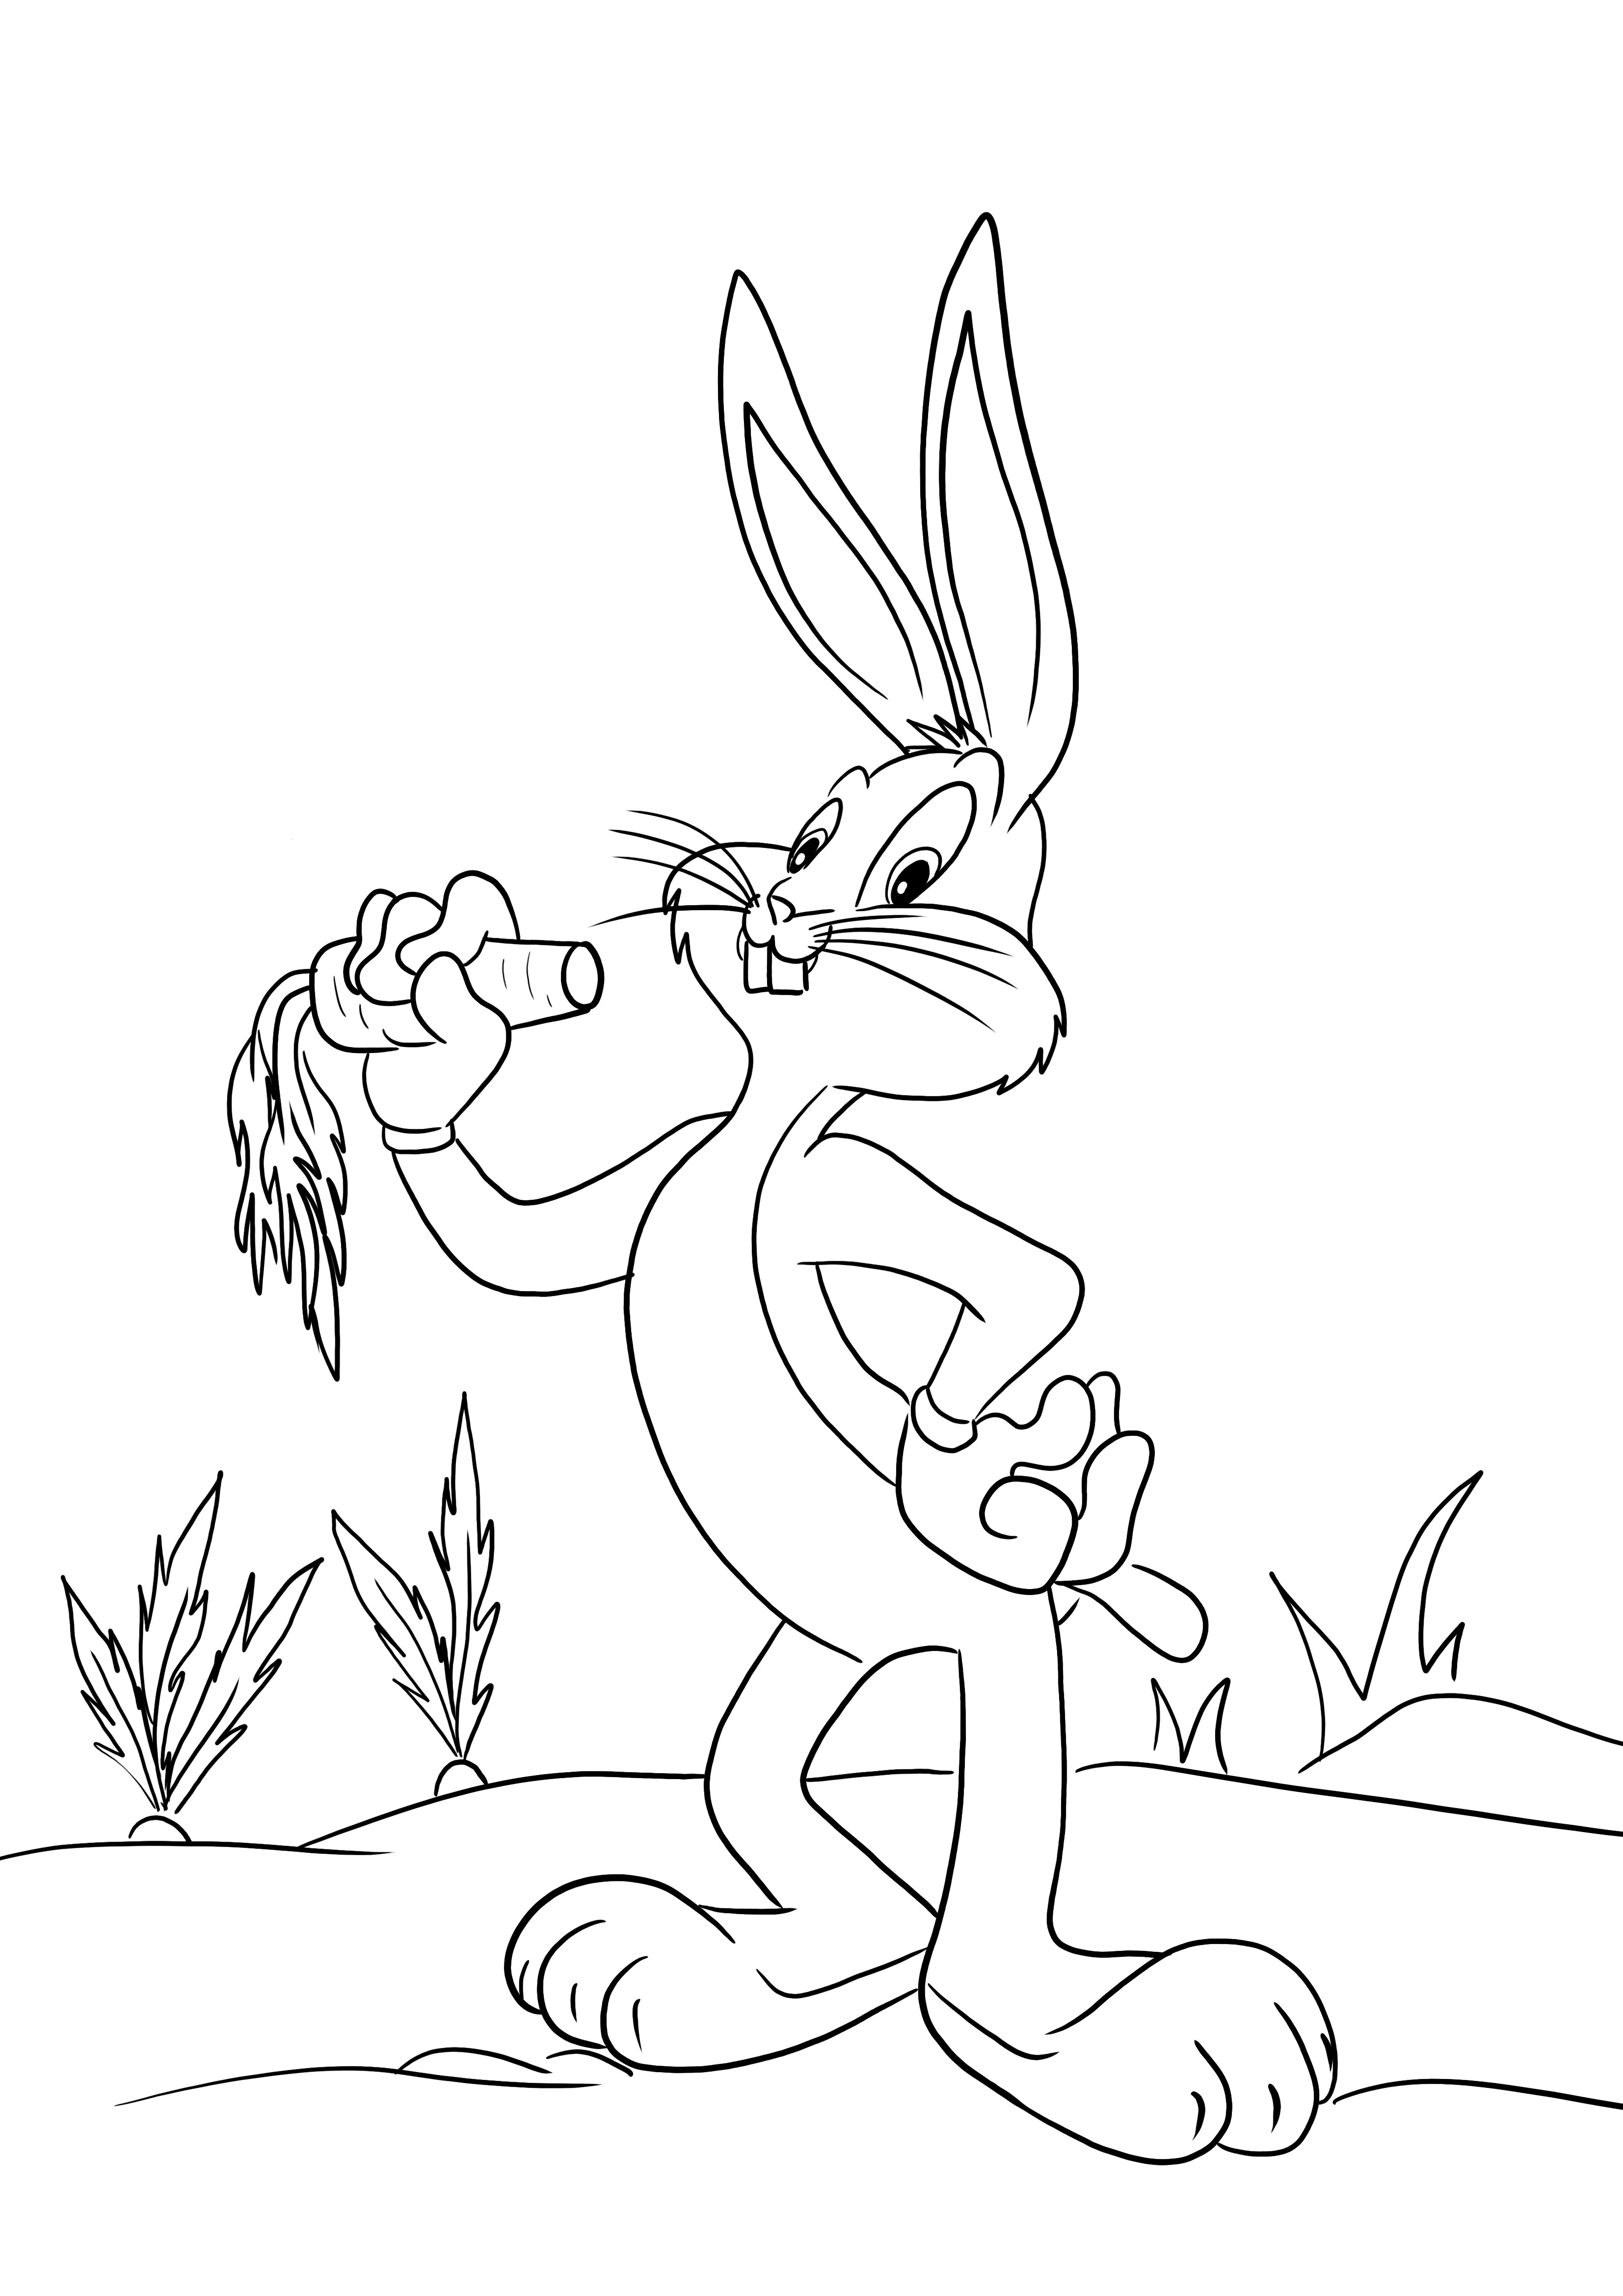 Gambar mewarnai Bugs Bunny yang mudah untuk anak-anak mewarnai dan bersenang-senang